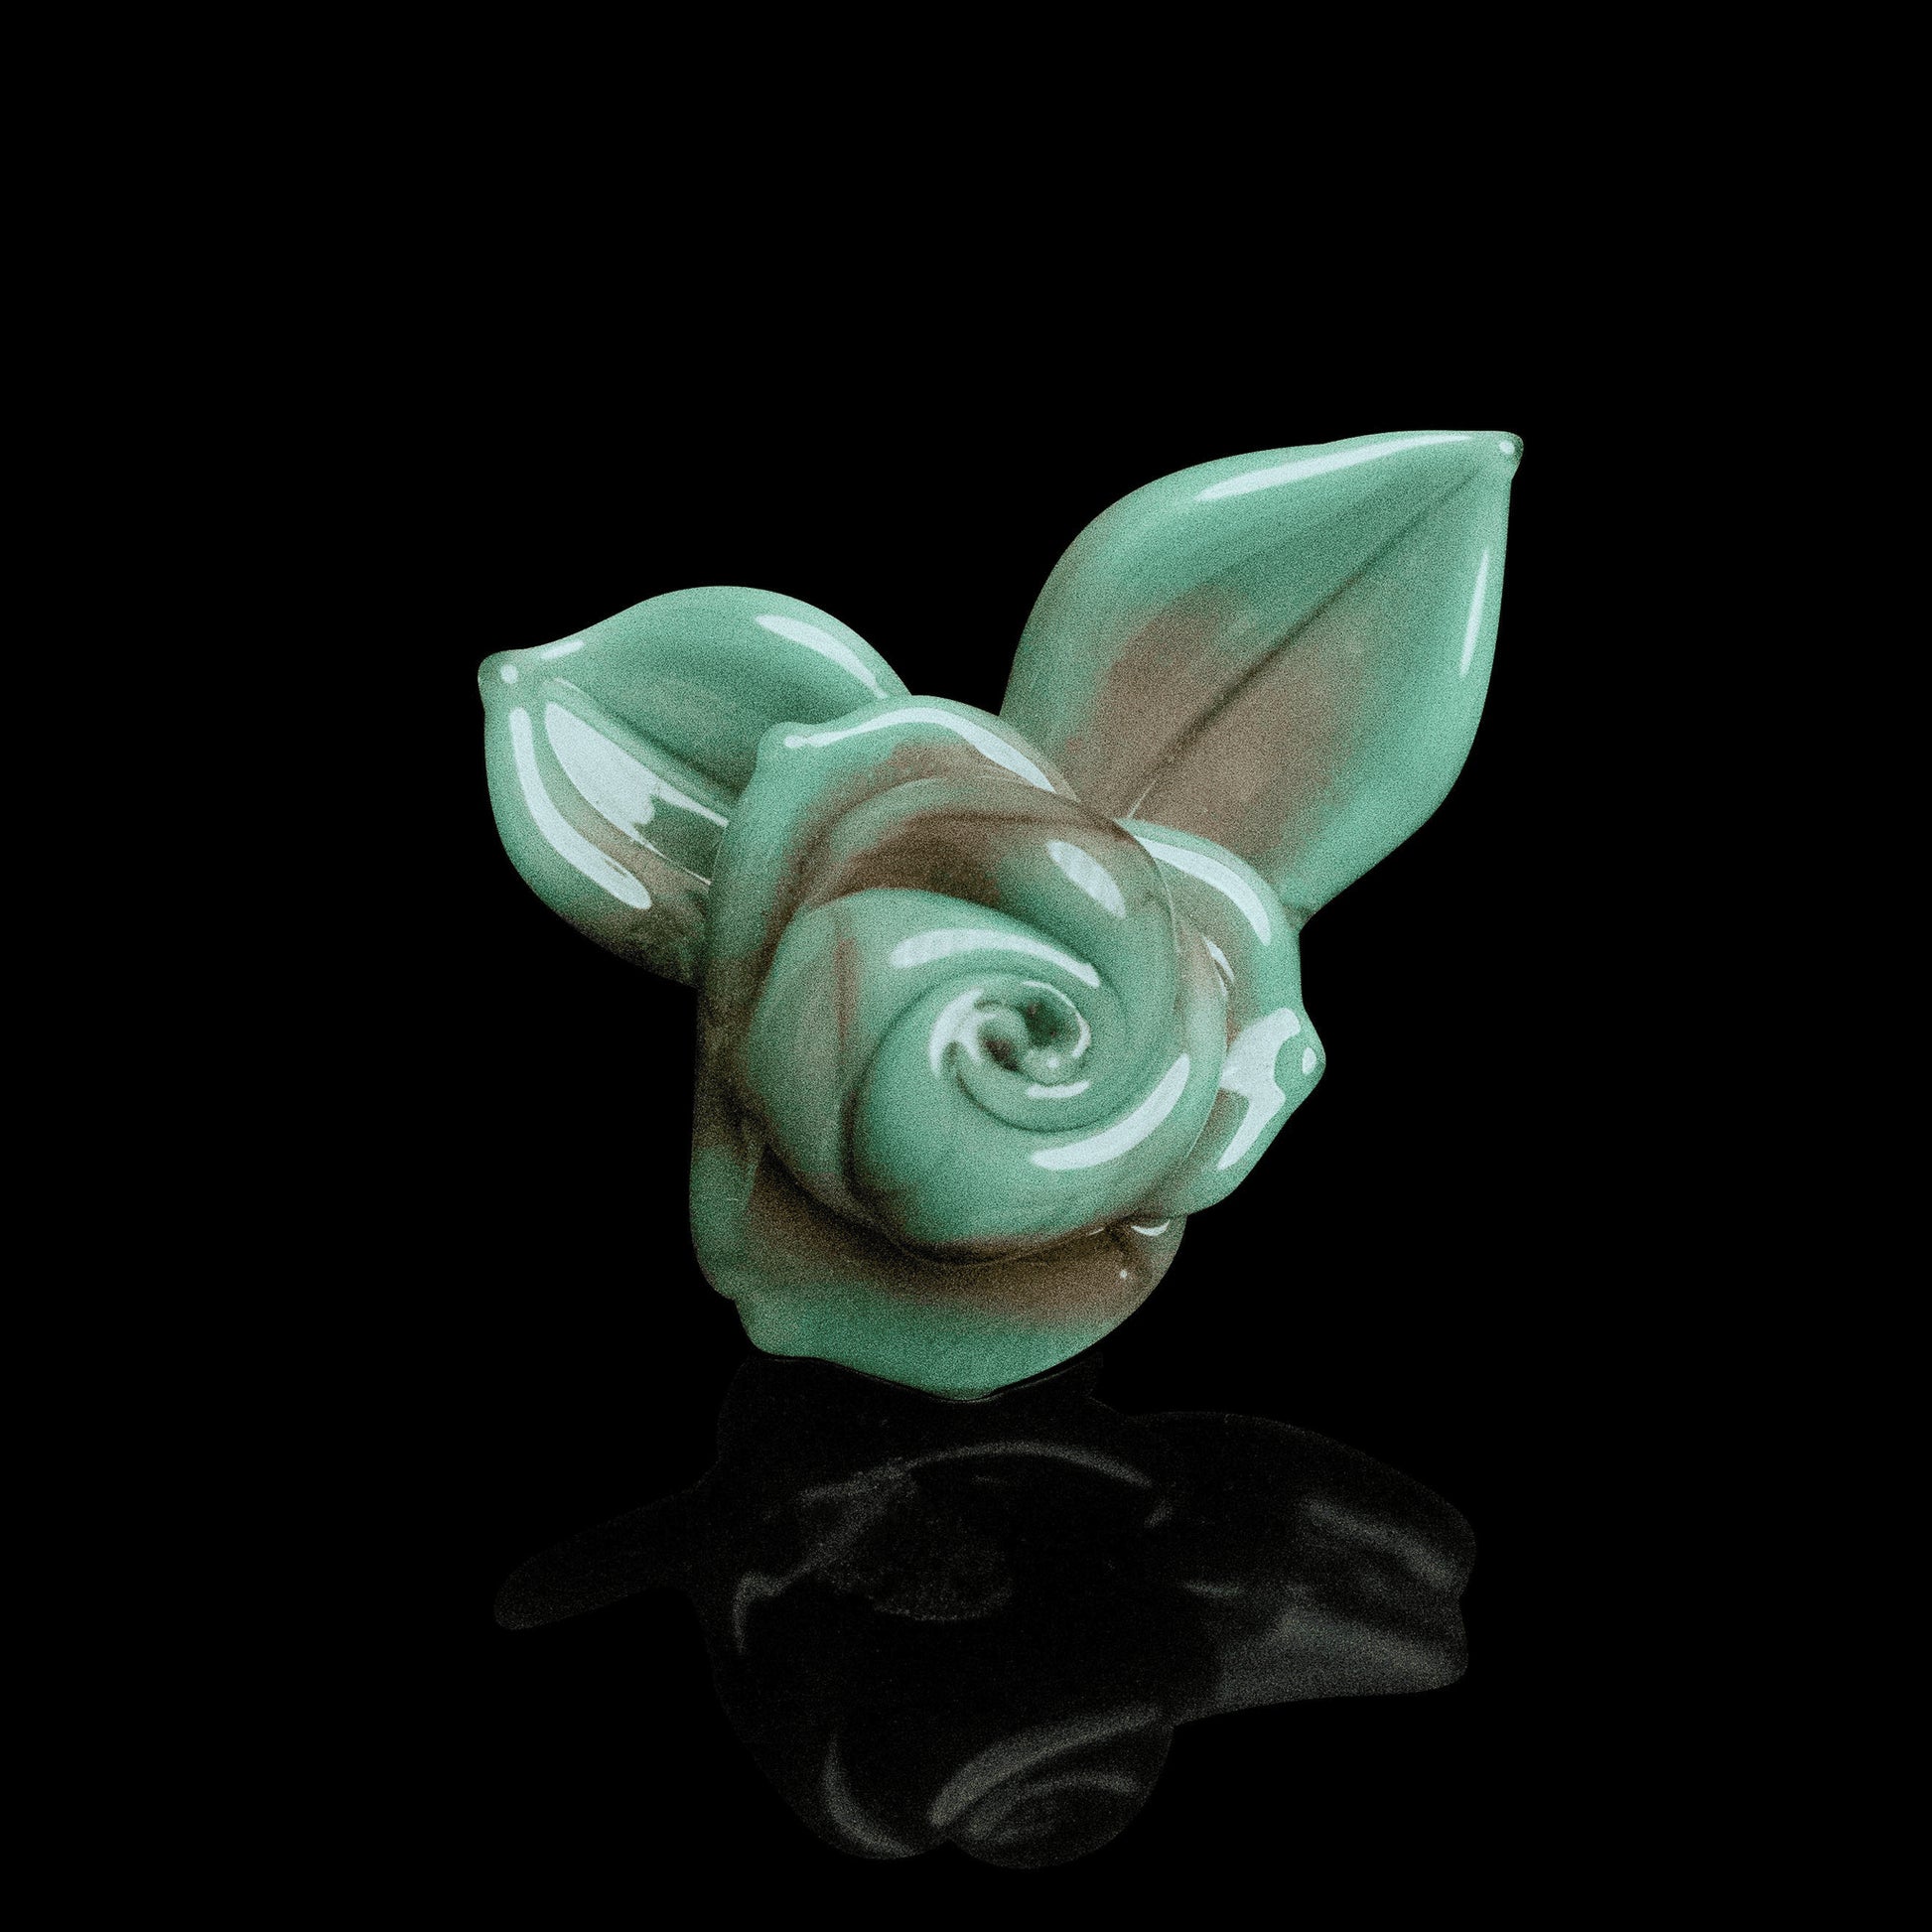 heady glass pendant - Turquoise Rose Pendant (B) by Sakibomb (2021)